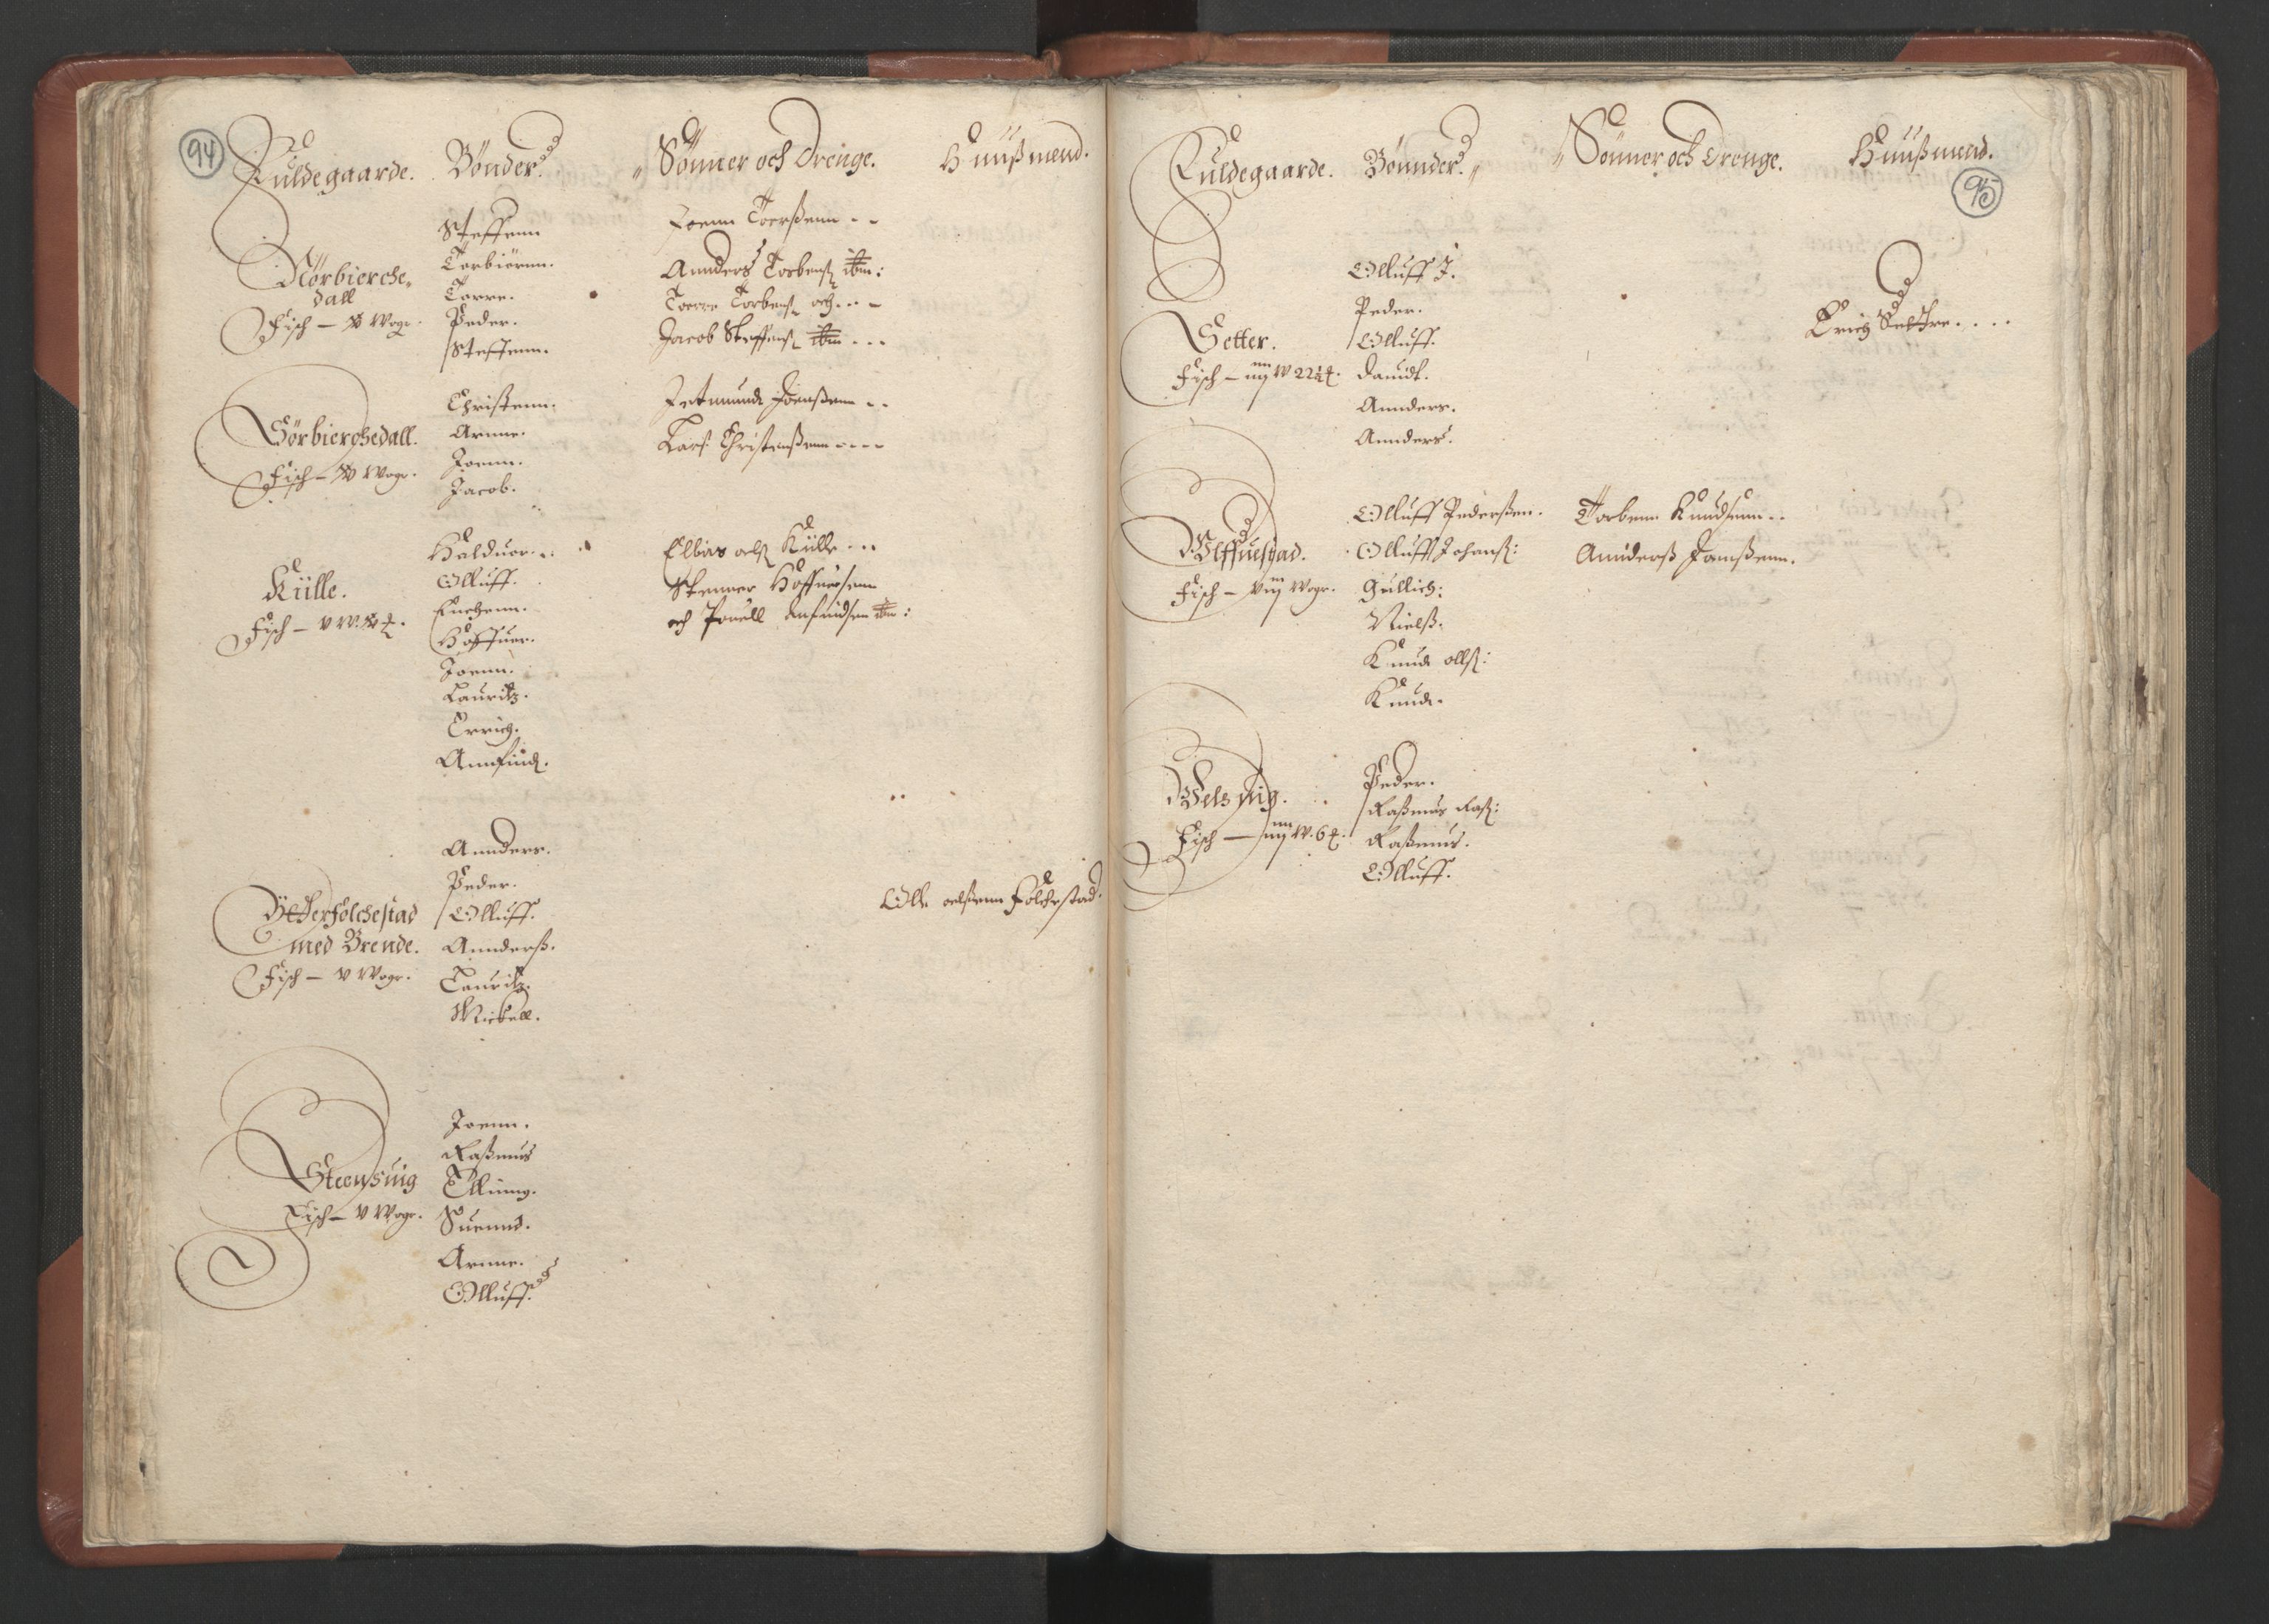 RA, Fogdenes og sorenskrivernes manntall 1664-1666, nr. 16: Romsdal fogderi og Sunnmøre fogderi, 1664-1665, s. 94-95